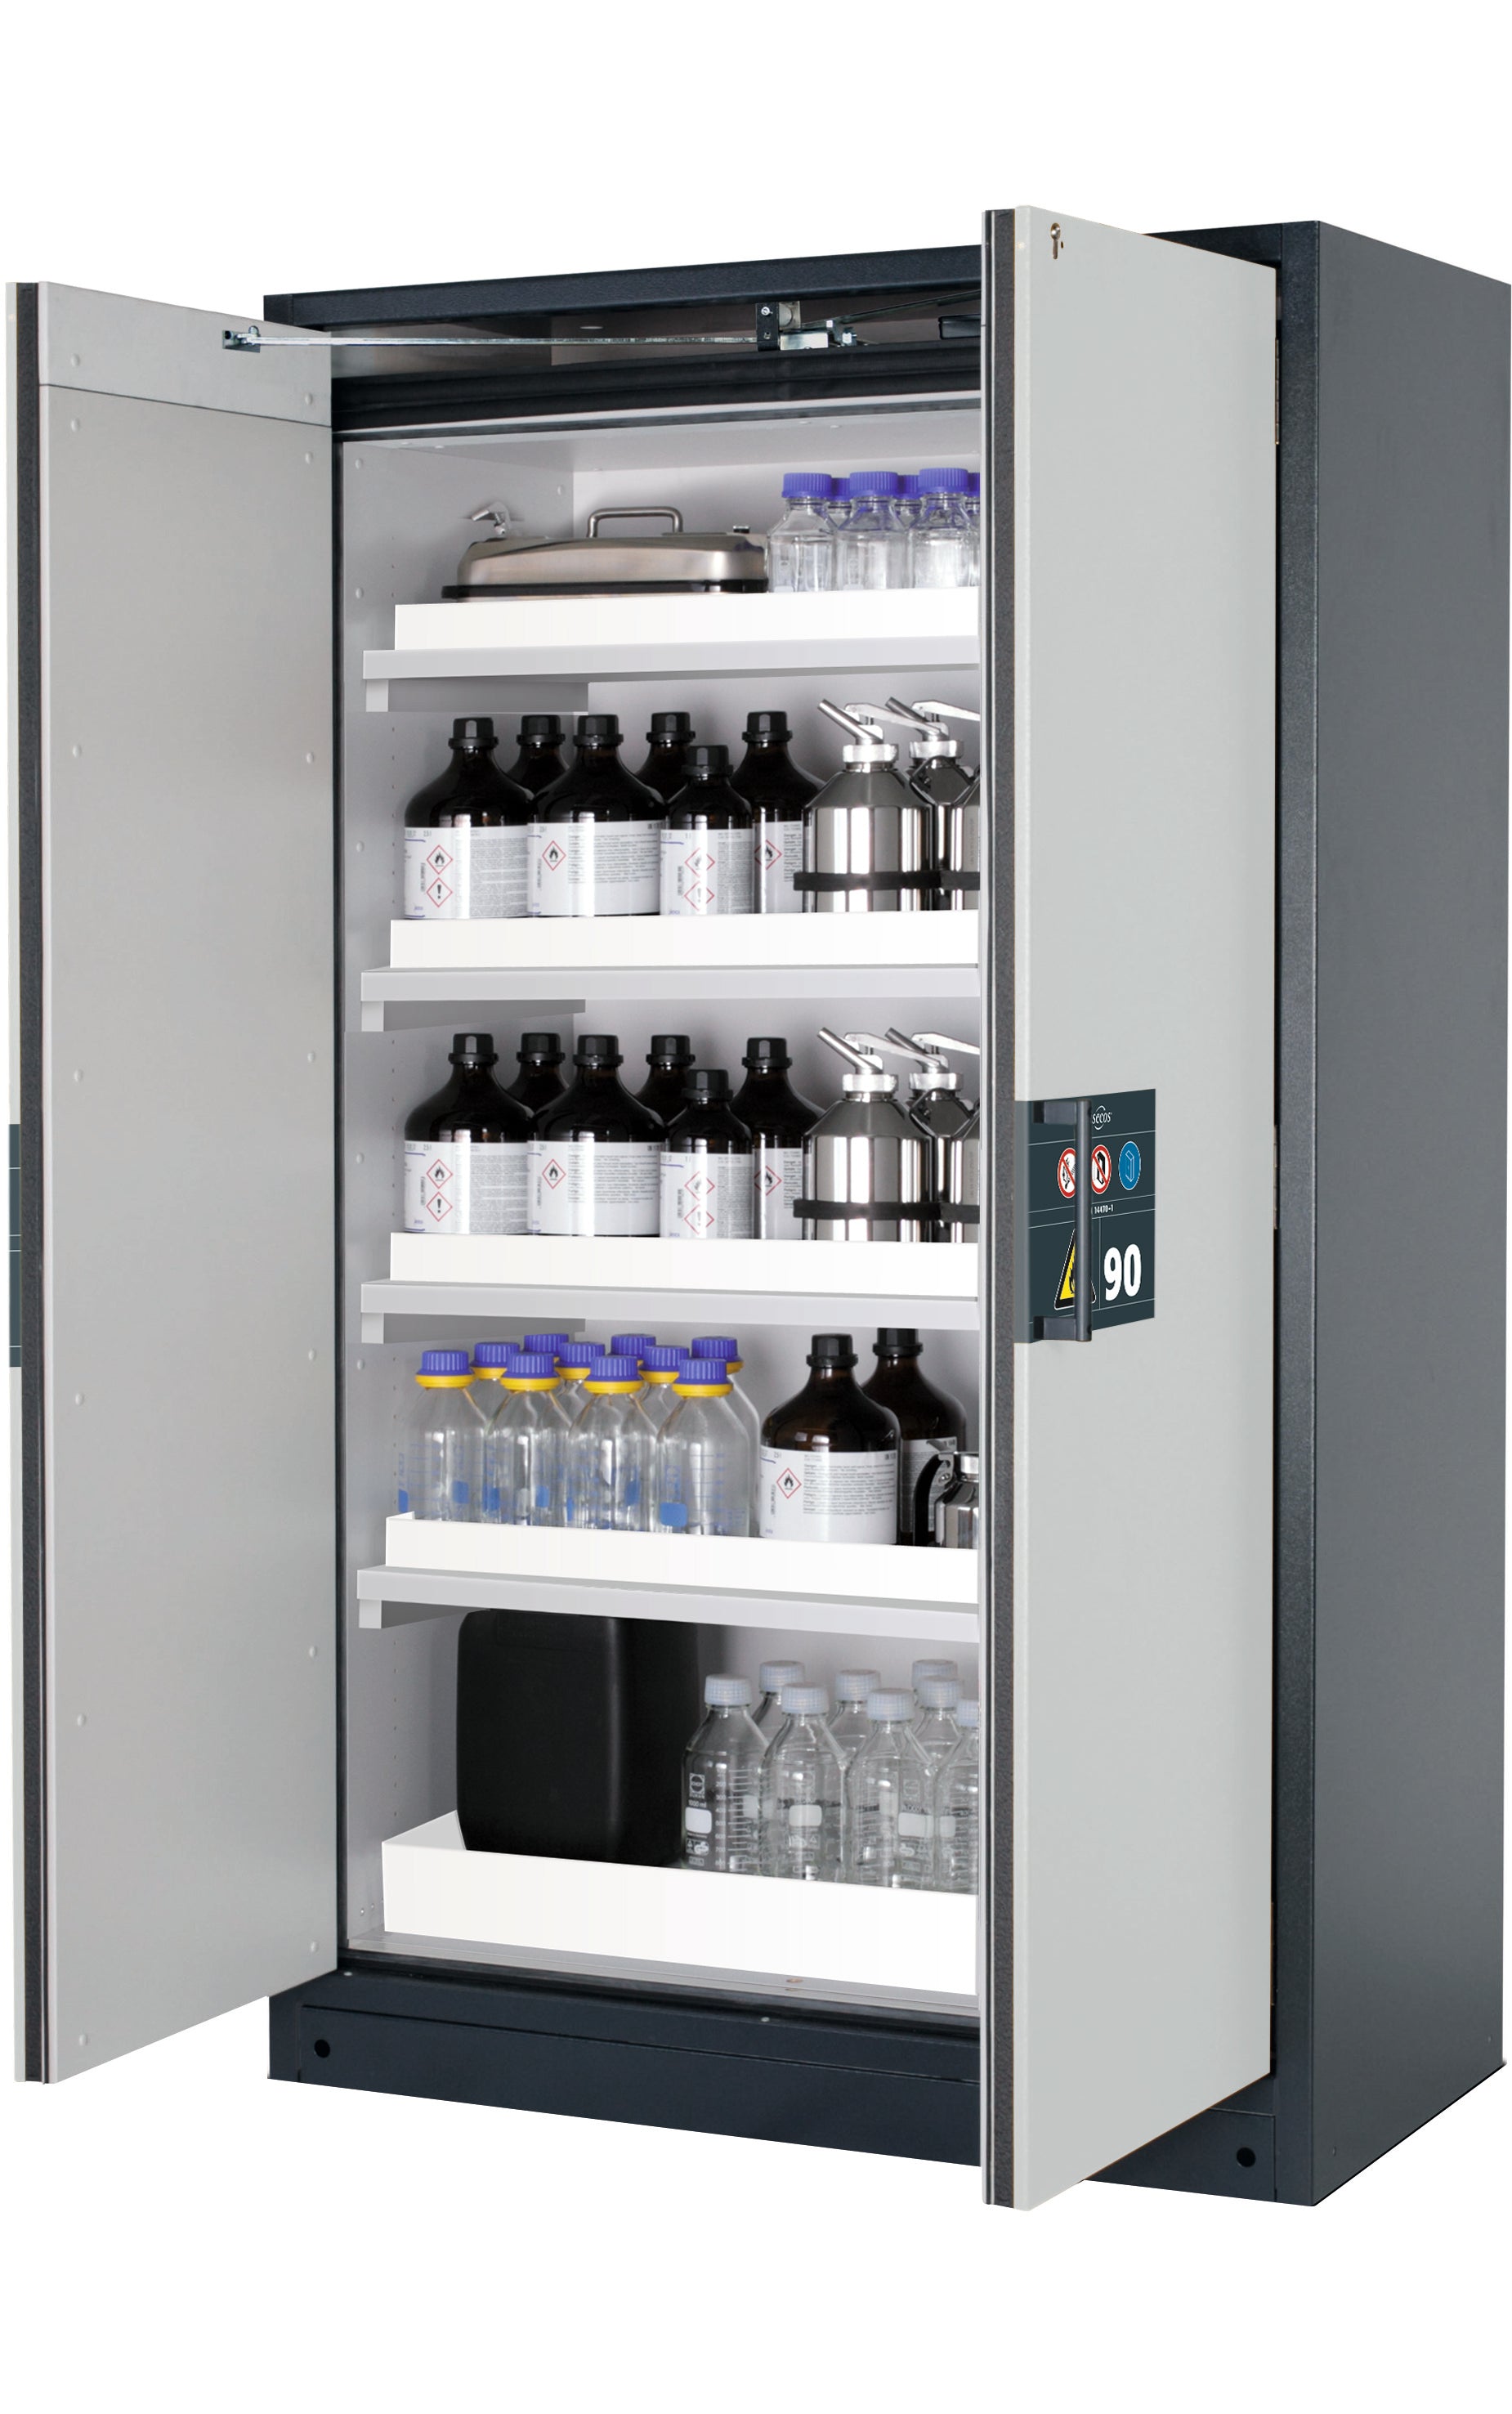 Type 90 safety storage cabinet Q-PEGASUS-90 model Q90.195.120.WDAC in light grey RAL 7035 with 4x tray shelf (standard) (polypropylene),